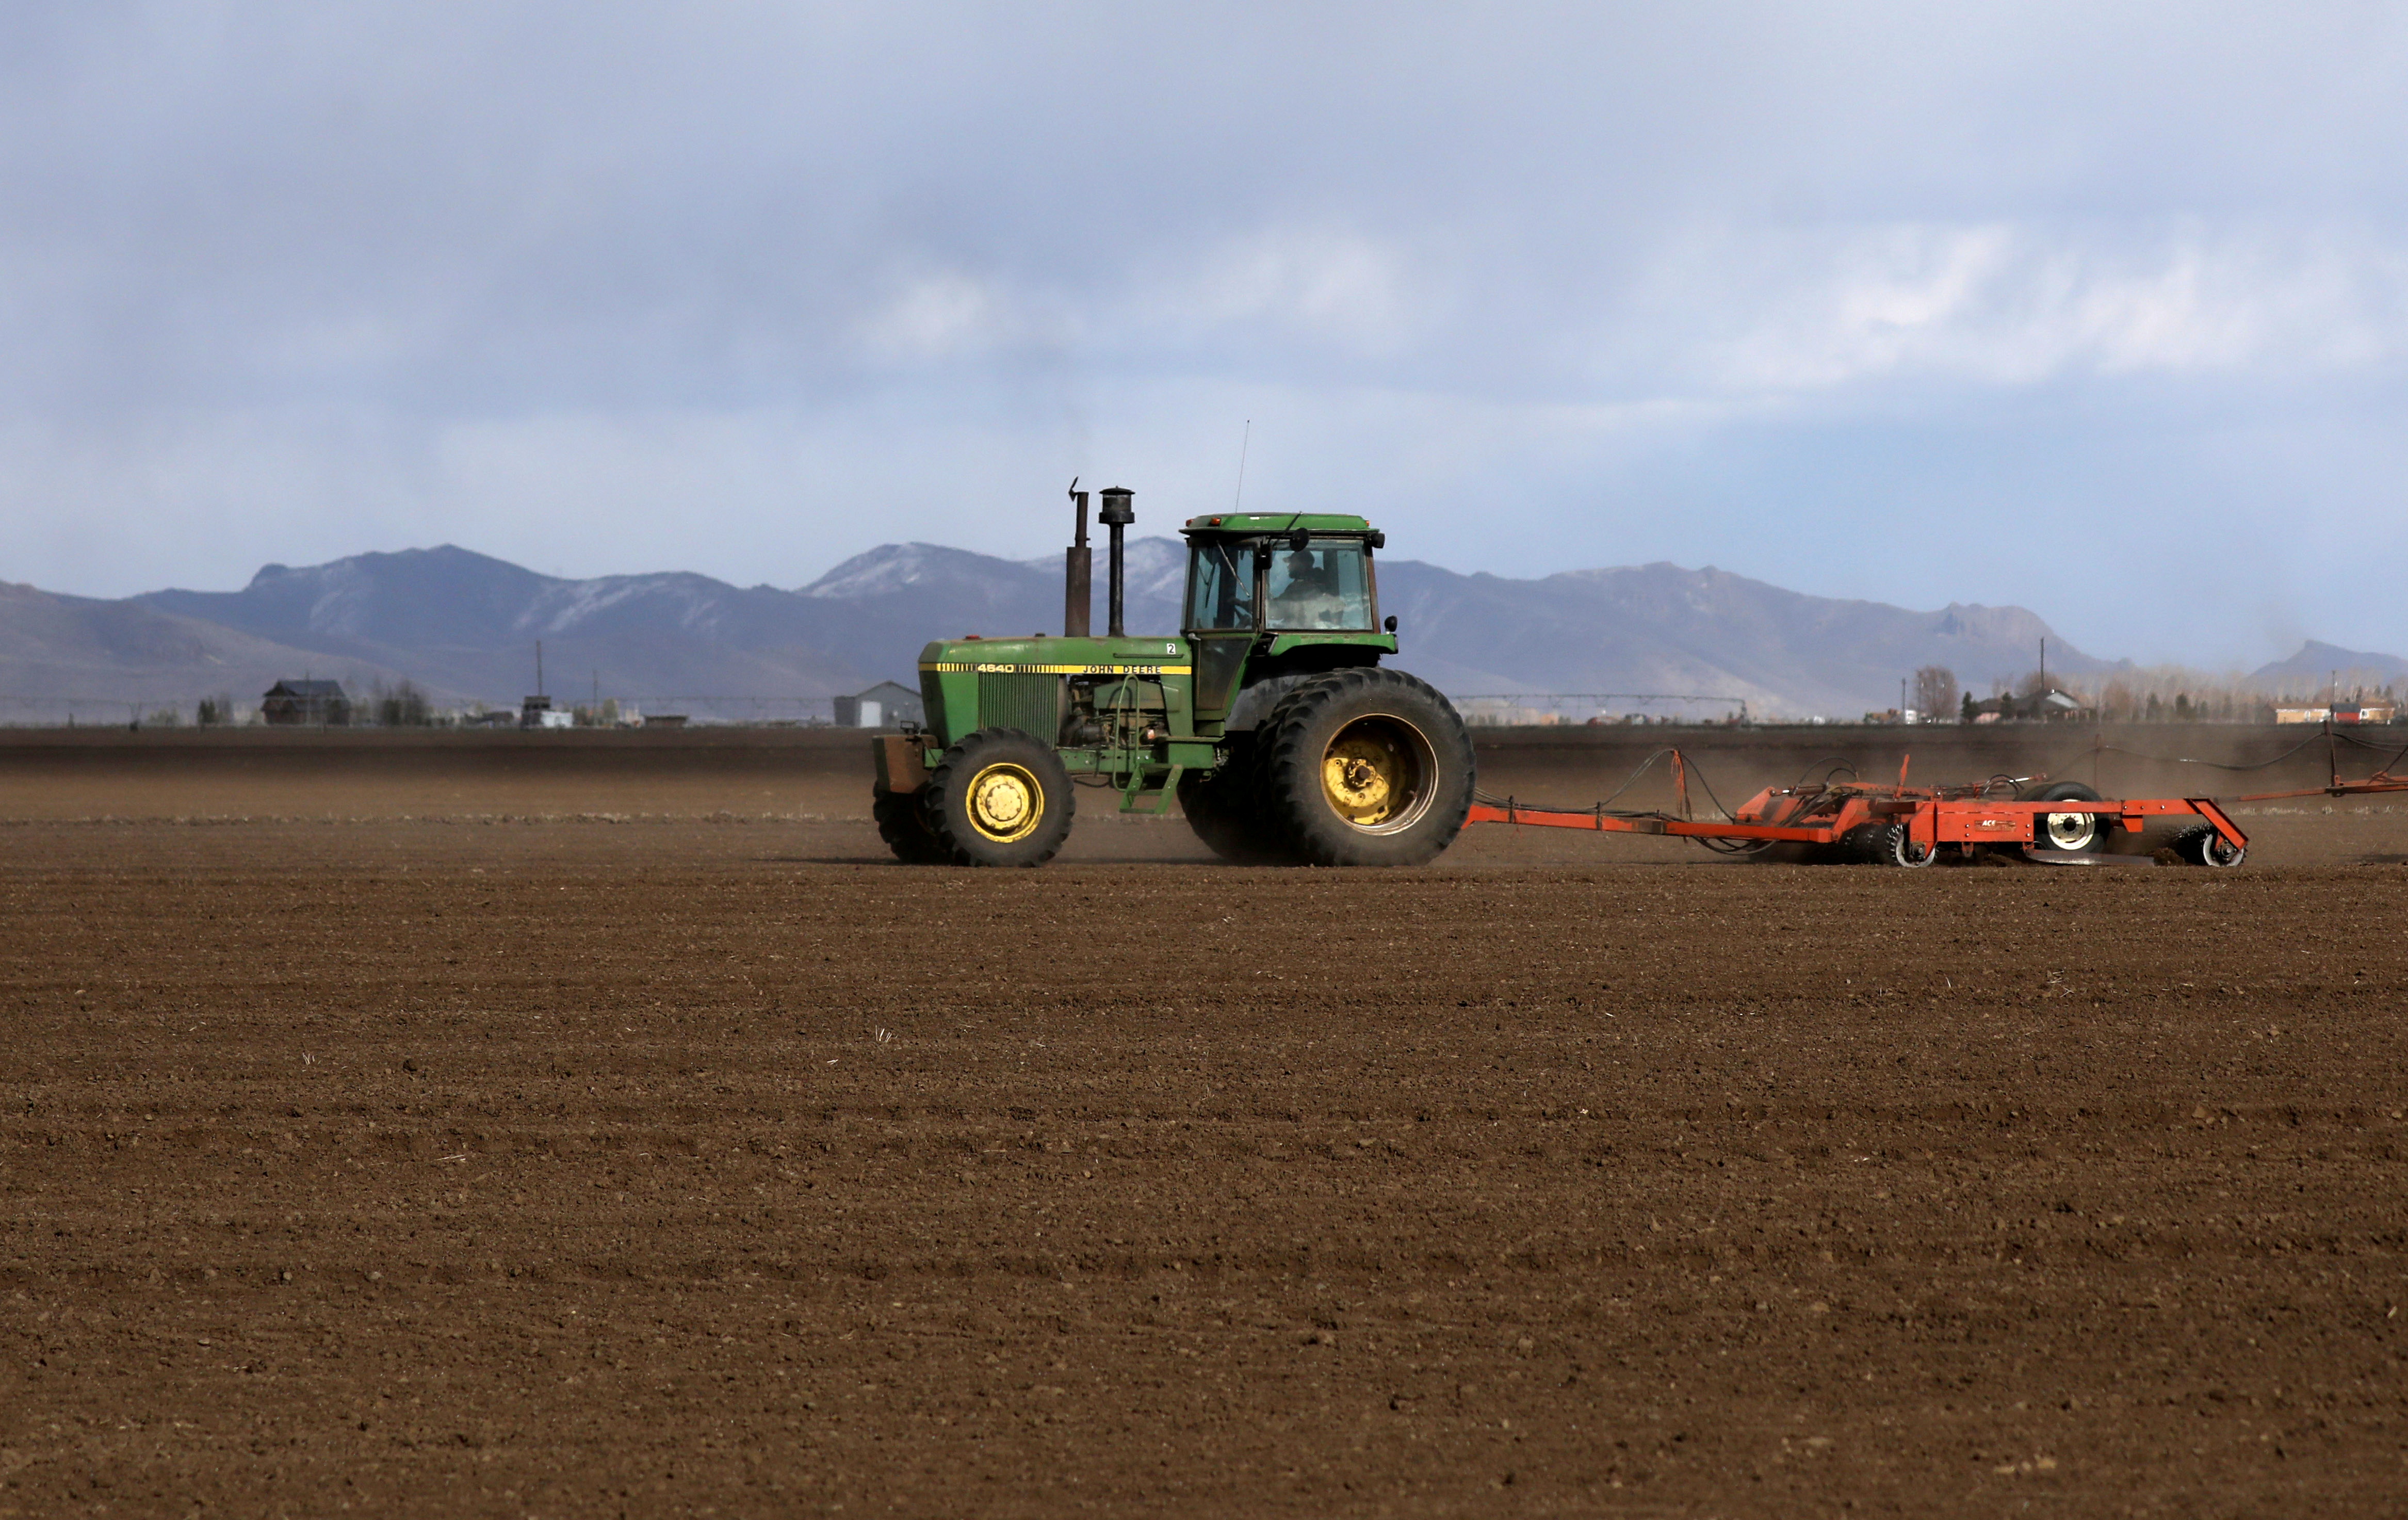 A farmer plows a field with a tractor in rural Idaho